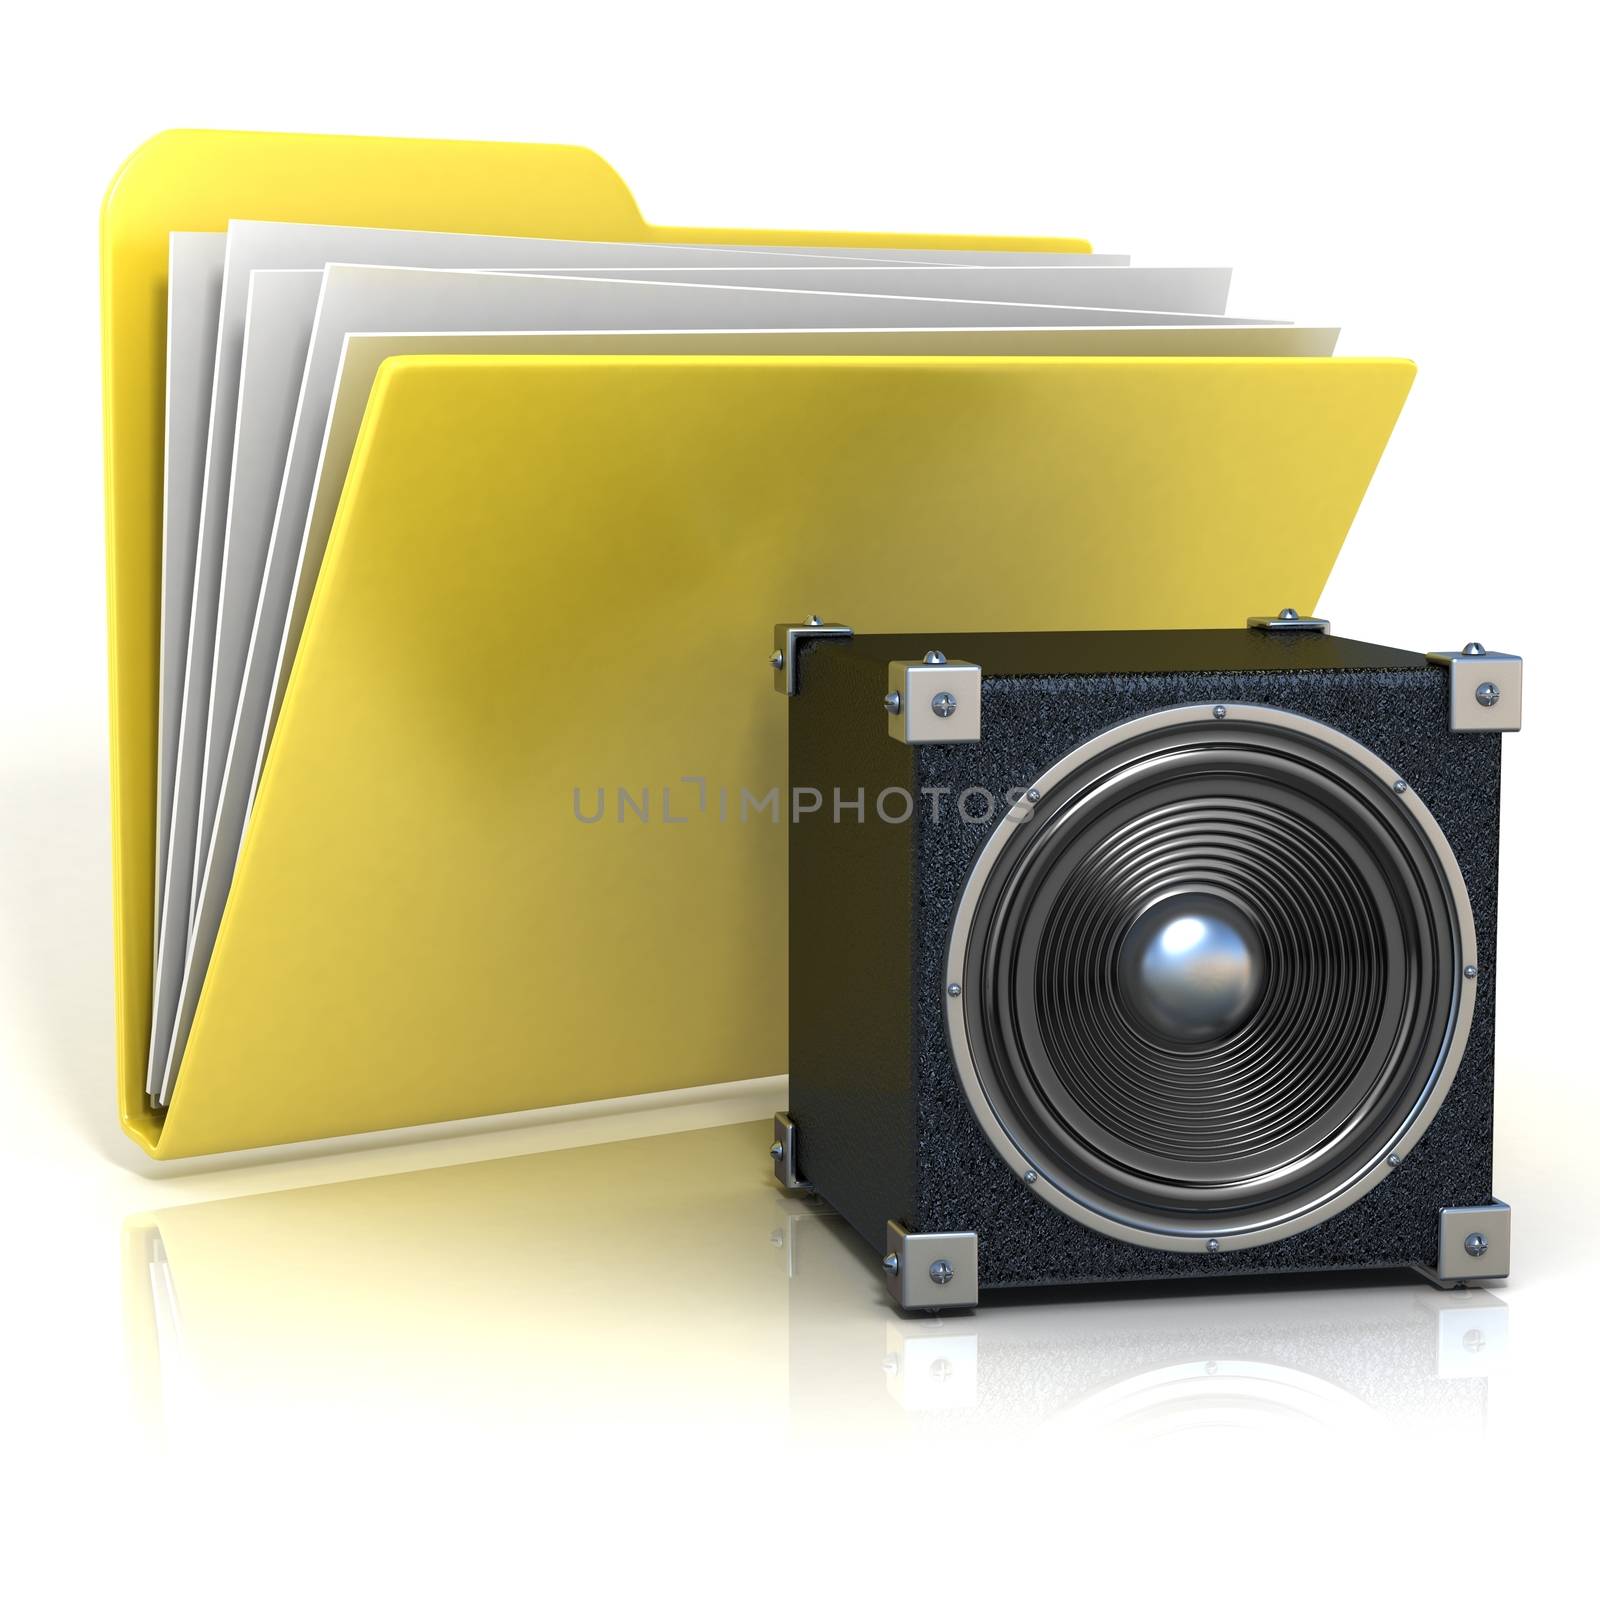 Folder icon with speaker. 3D render illustration, isolated on white background